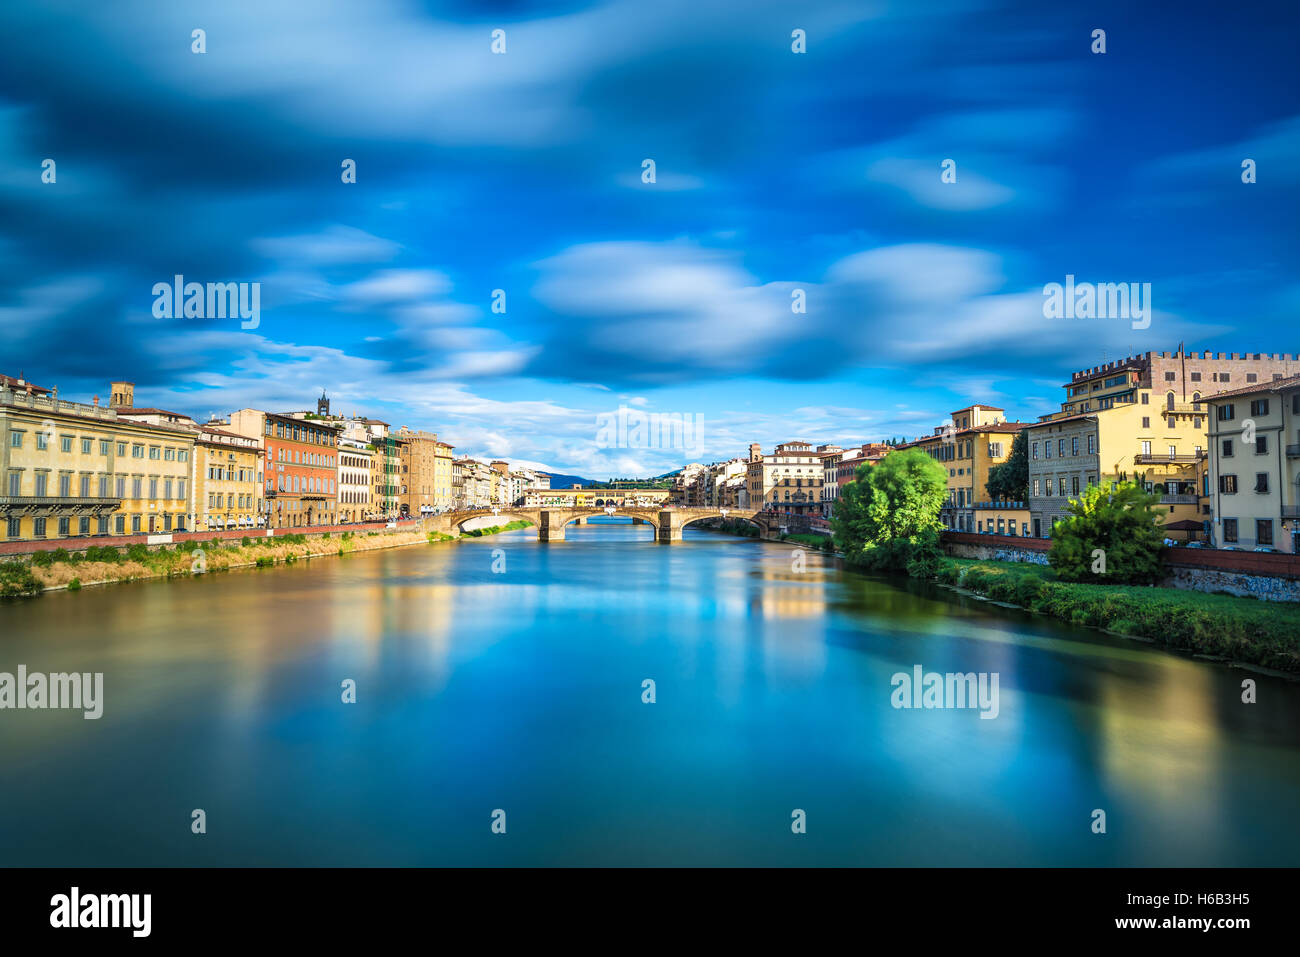 Florence or Firenze, Santa Trinita and Old Bridge landmark on Arno river, sunset landscape with reflection. Tuscany, Italy. Stock Photo